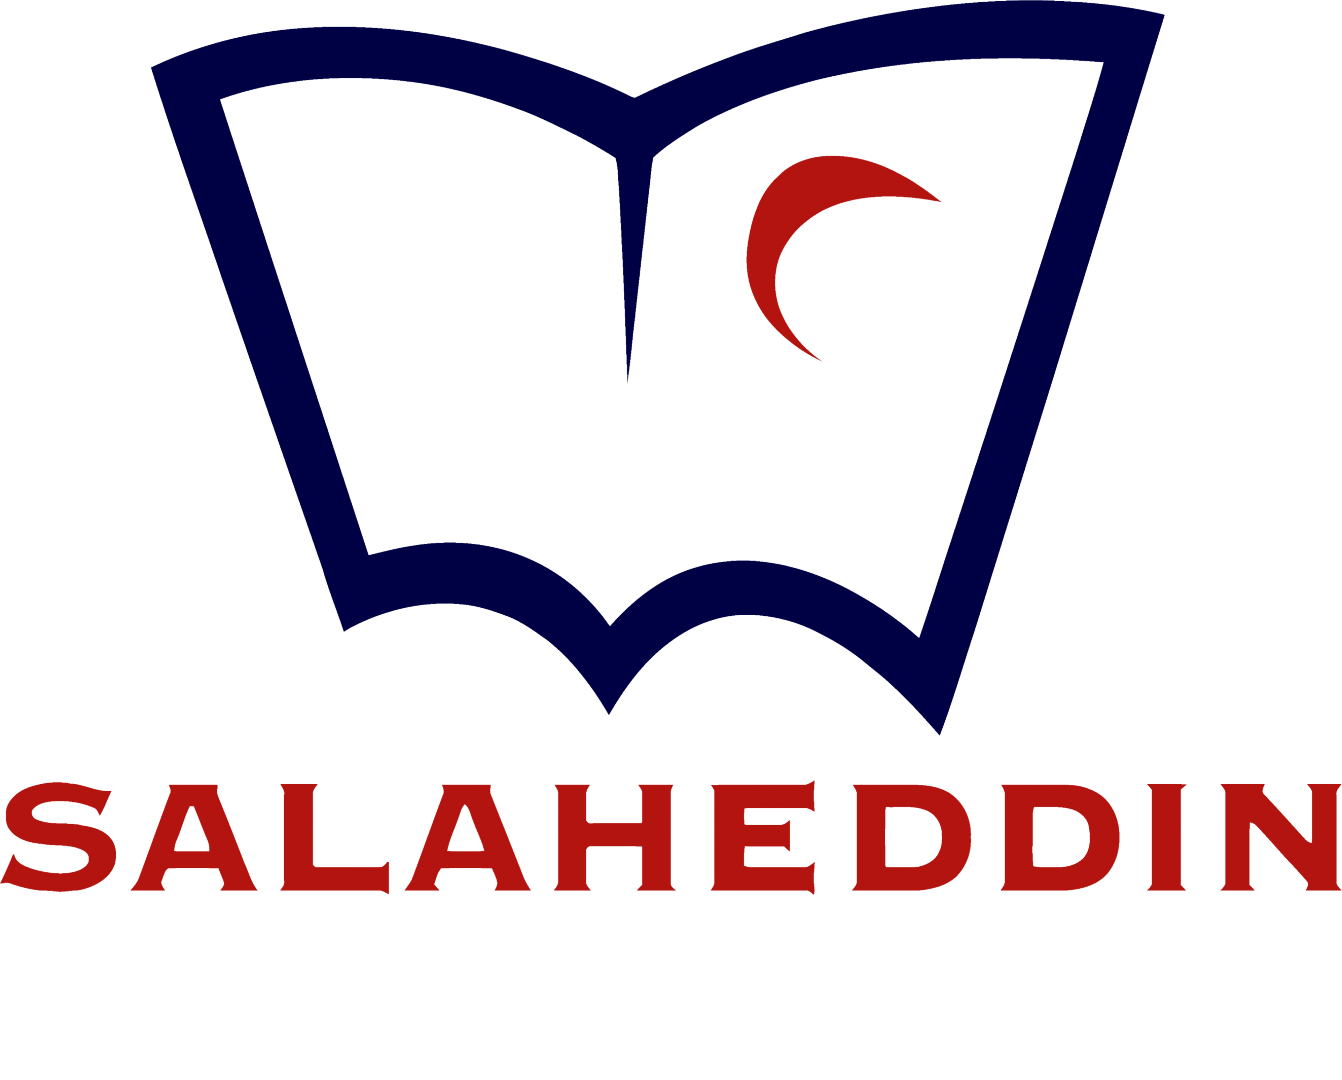 Salaheddin School